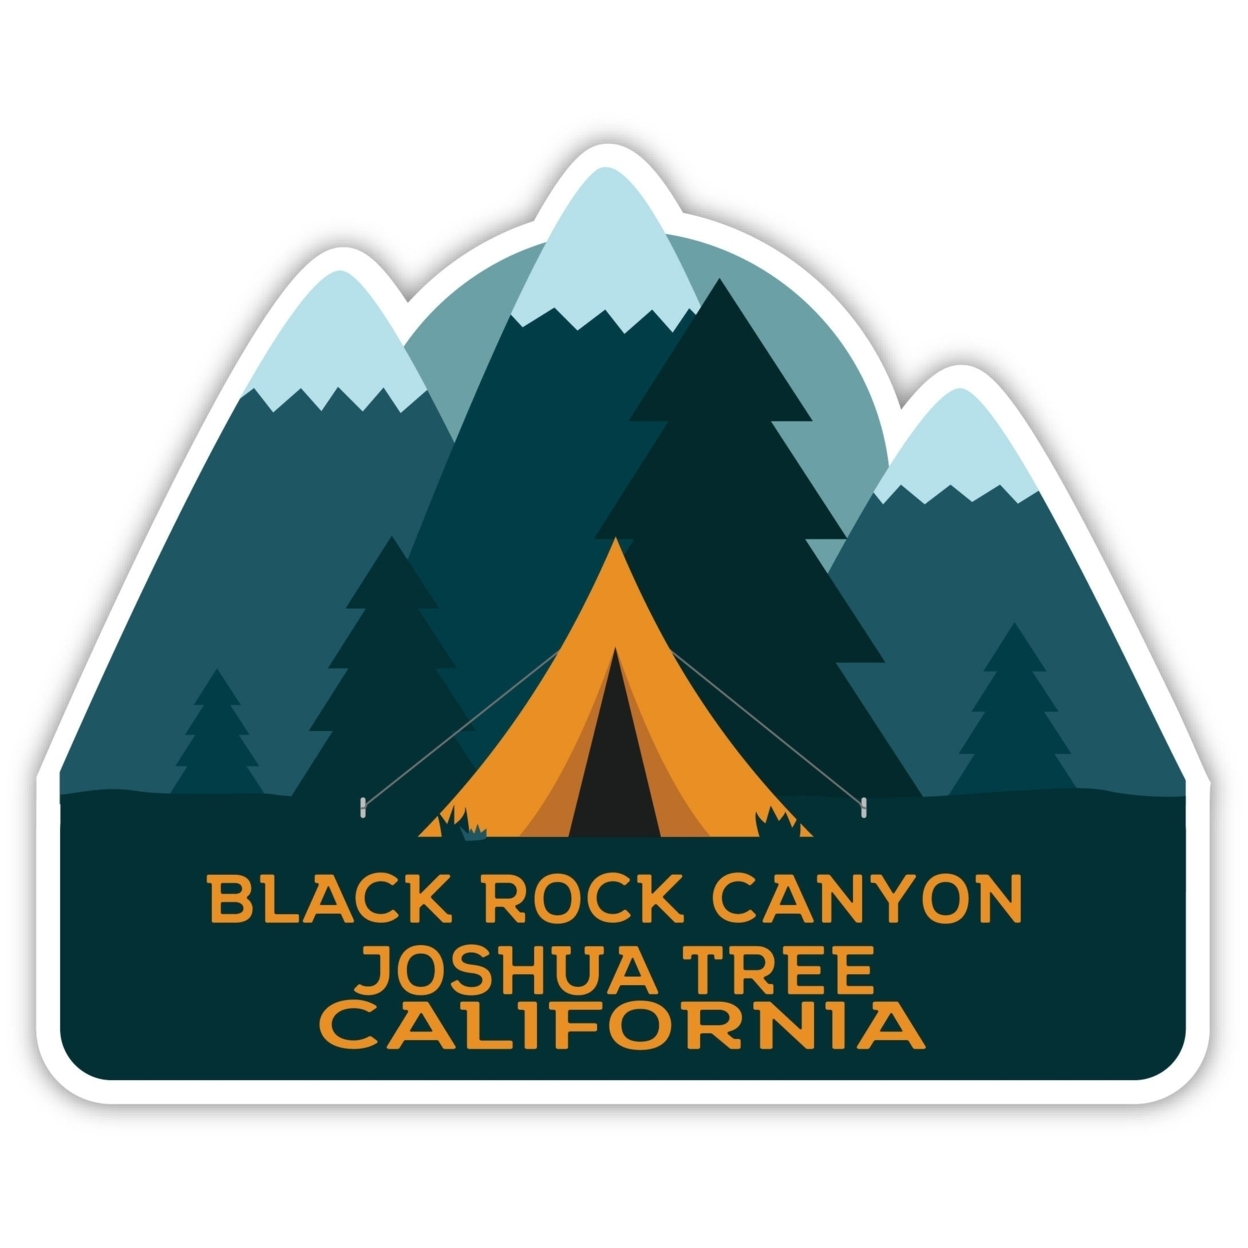 Black Rock Canyon Joshua Tree California Souvenir Decorative Stickers (Choose Theme And Size) - 4-Pack, 6-Inch, Bear